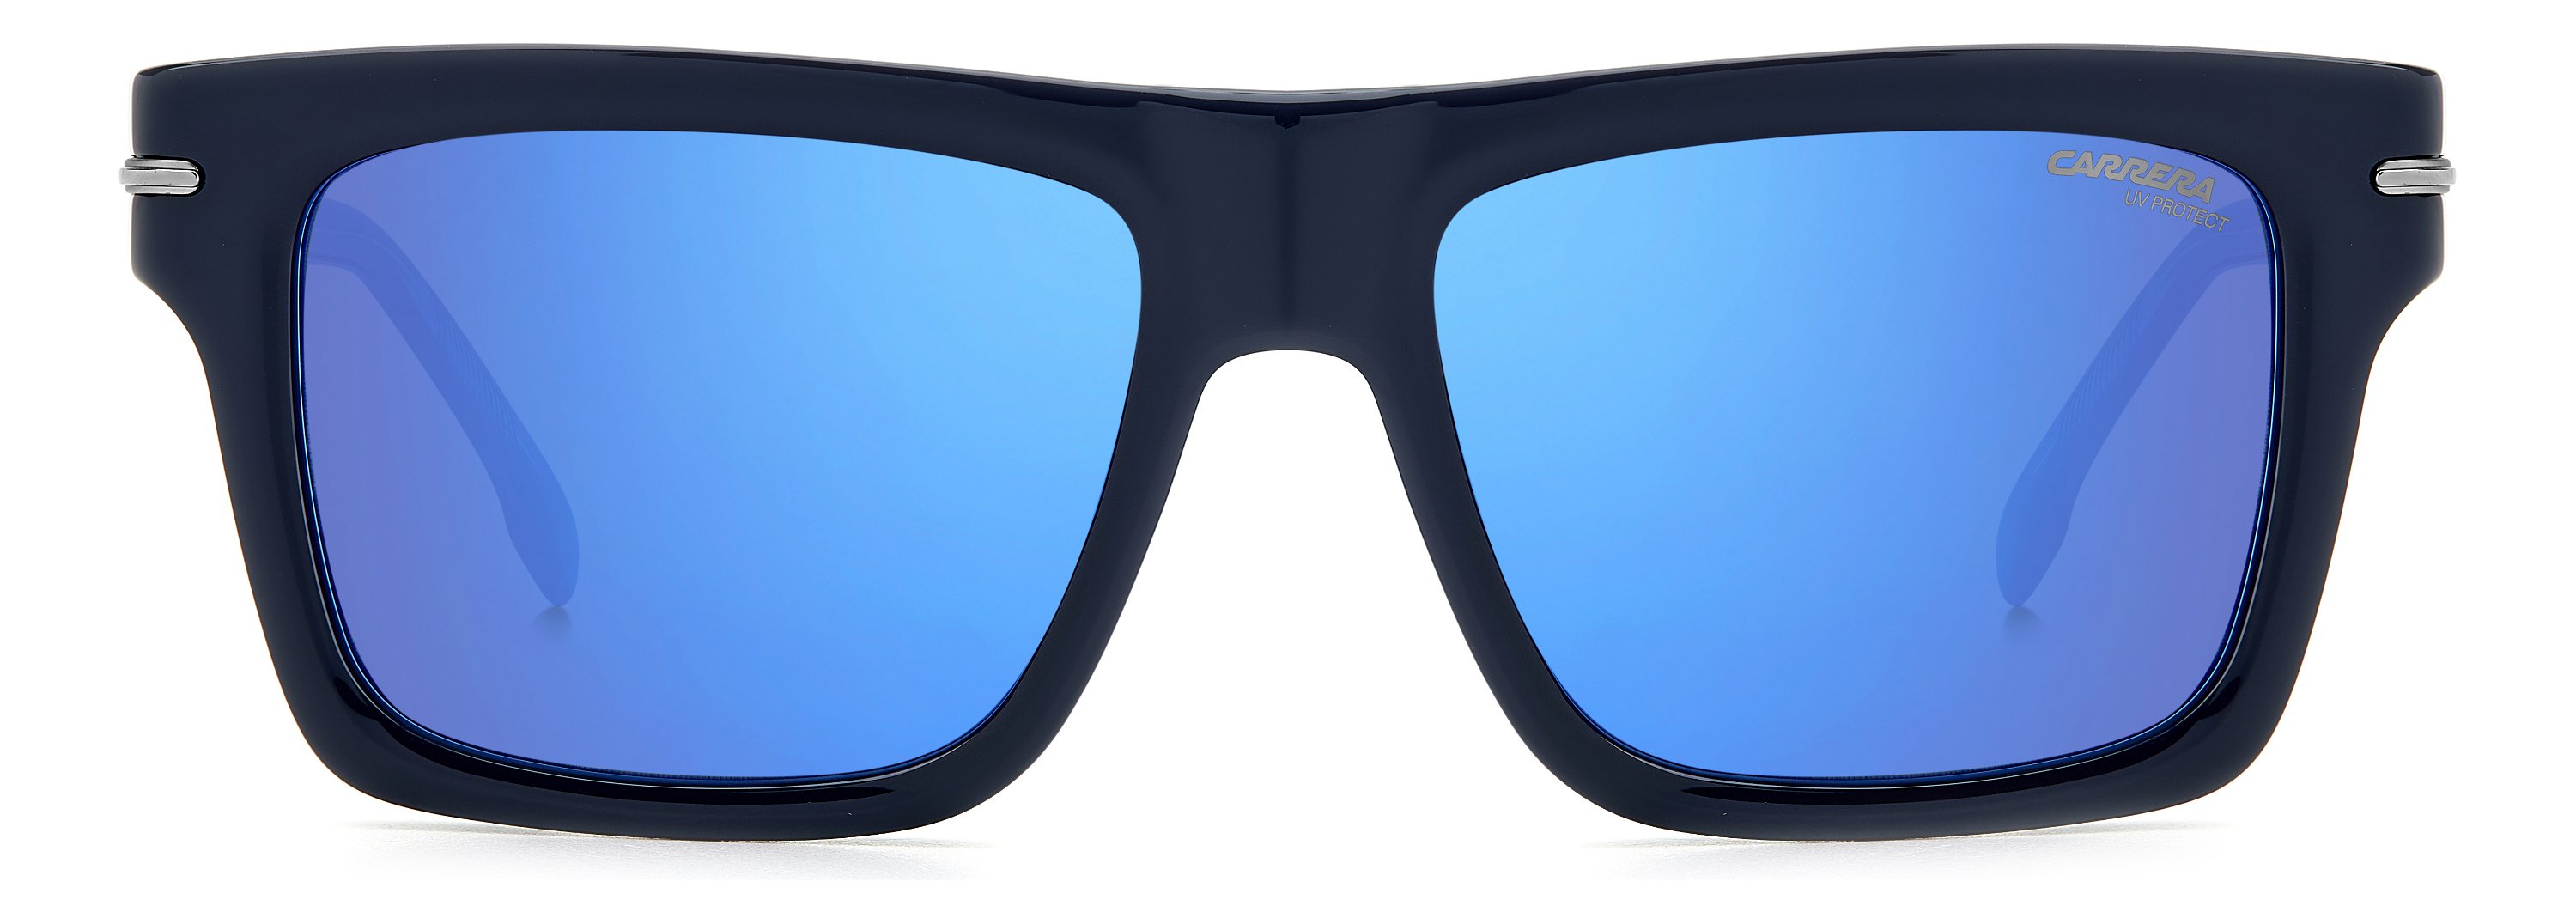 Carrera Sonnenbrille 305/S Y00 blau